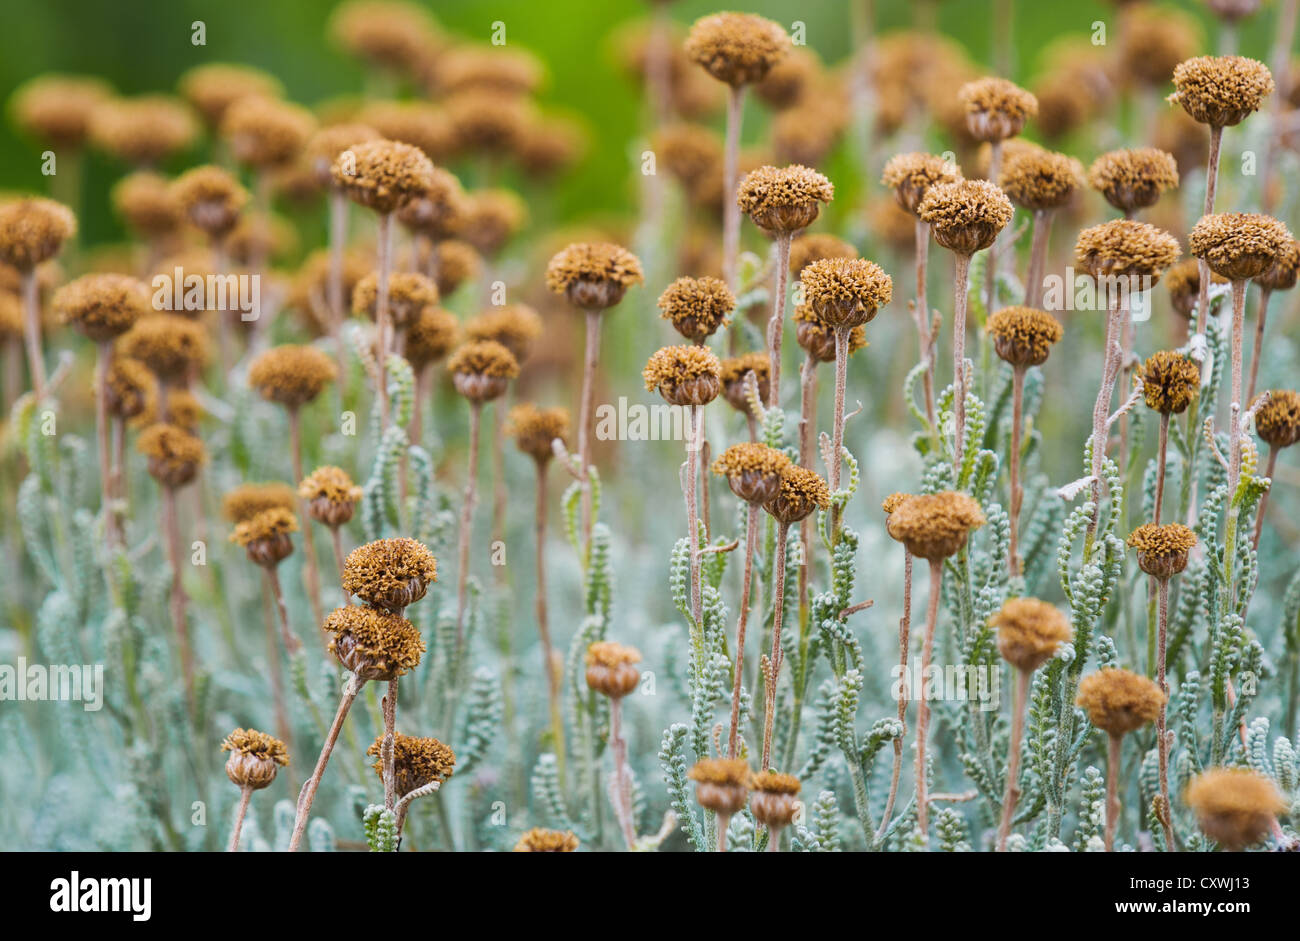 Field with dried santolina flowers (santolina chamaecyparissus) Stock Photo